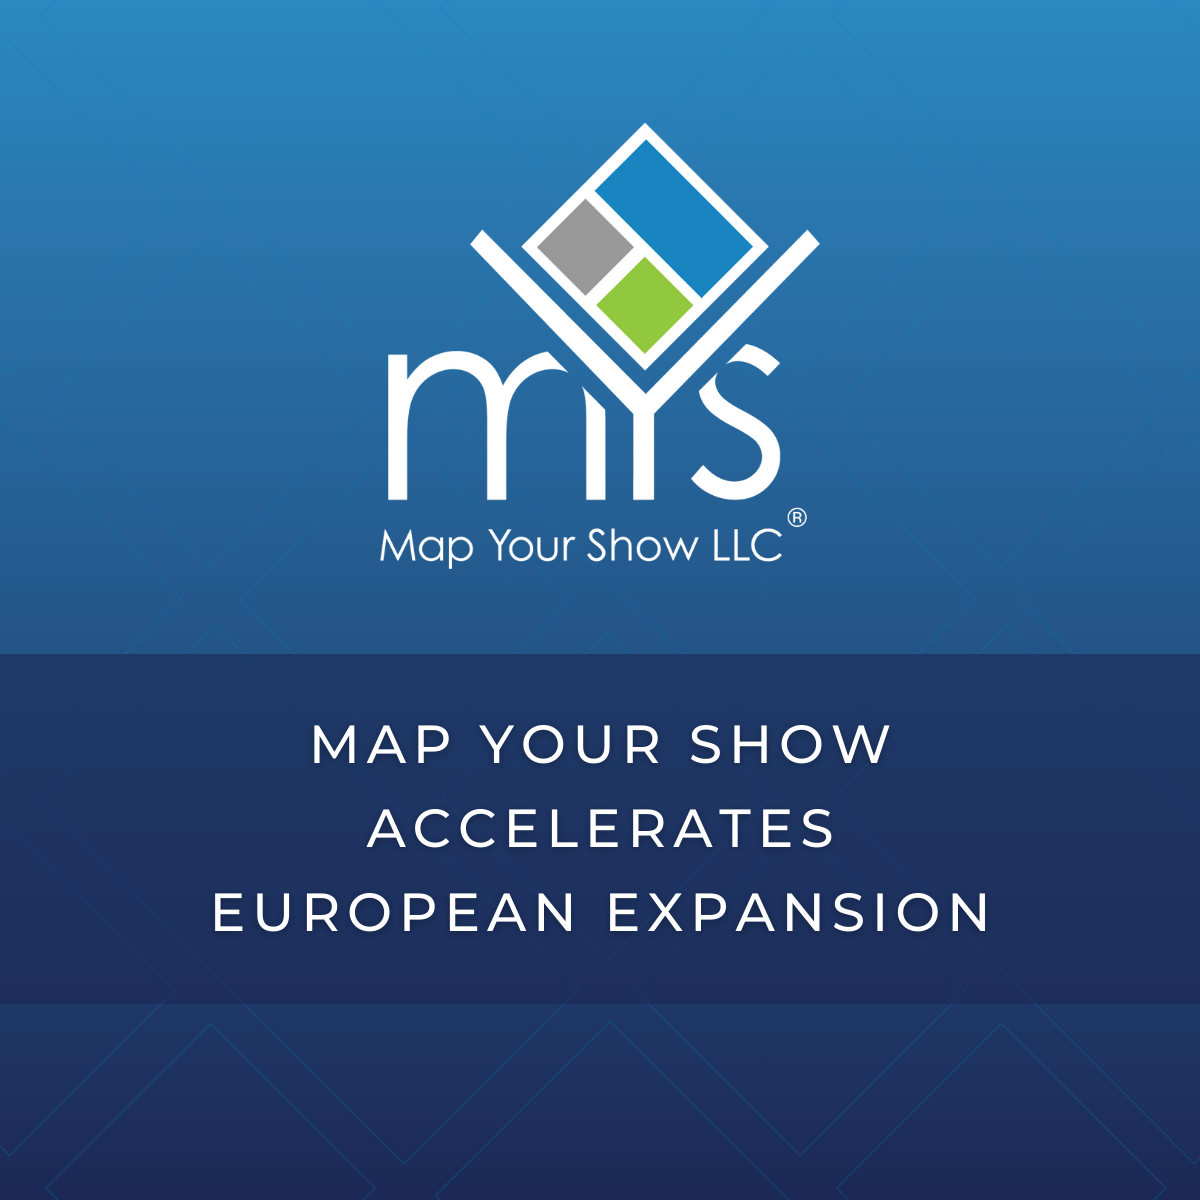 Map Your Show Accelerates European Expansion